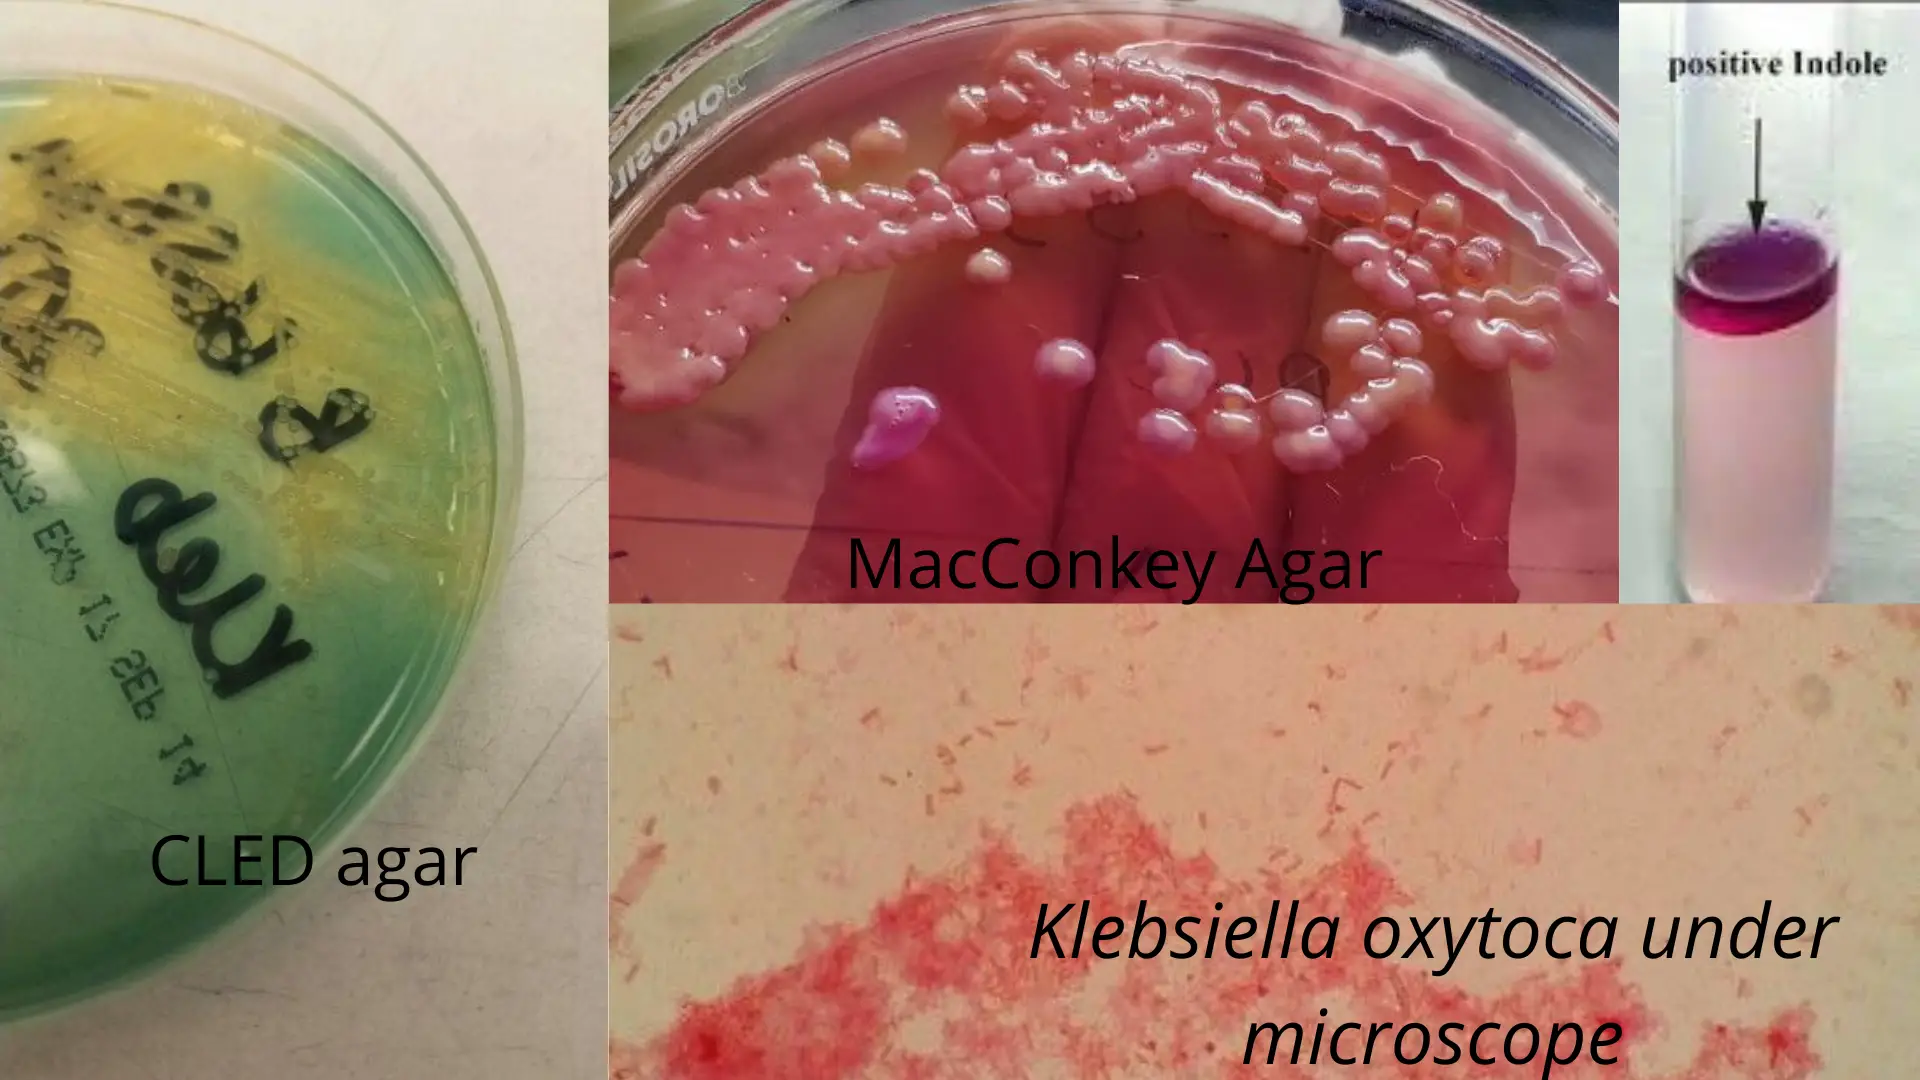 Klebsiella oxytoca: Properties and Pathogenesis